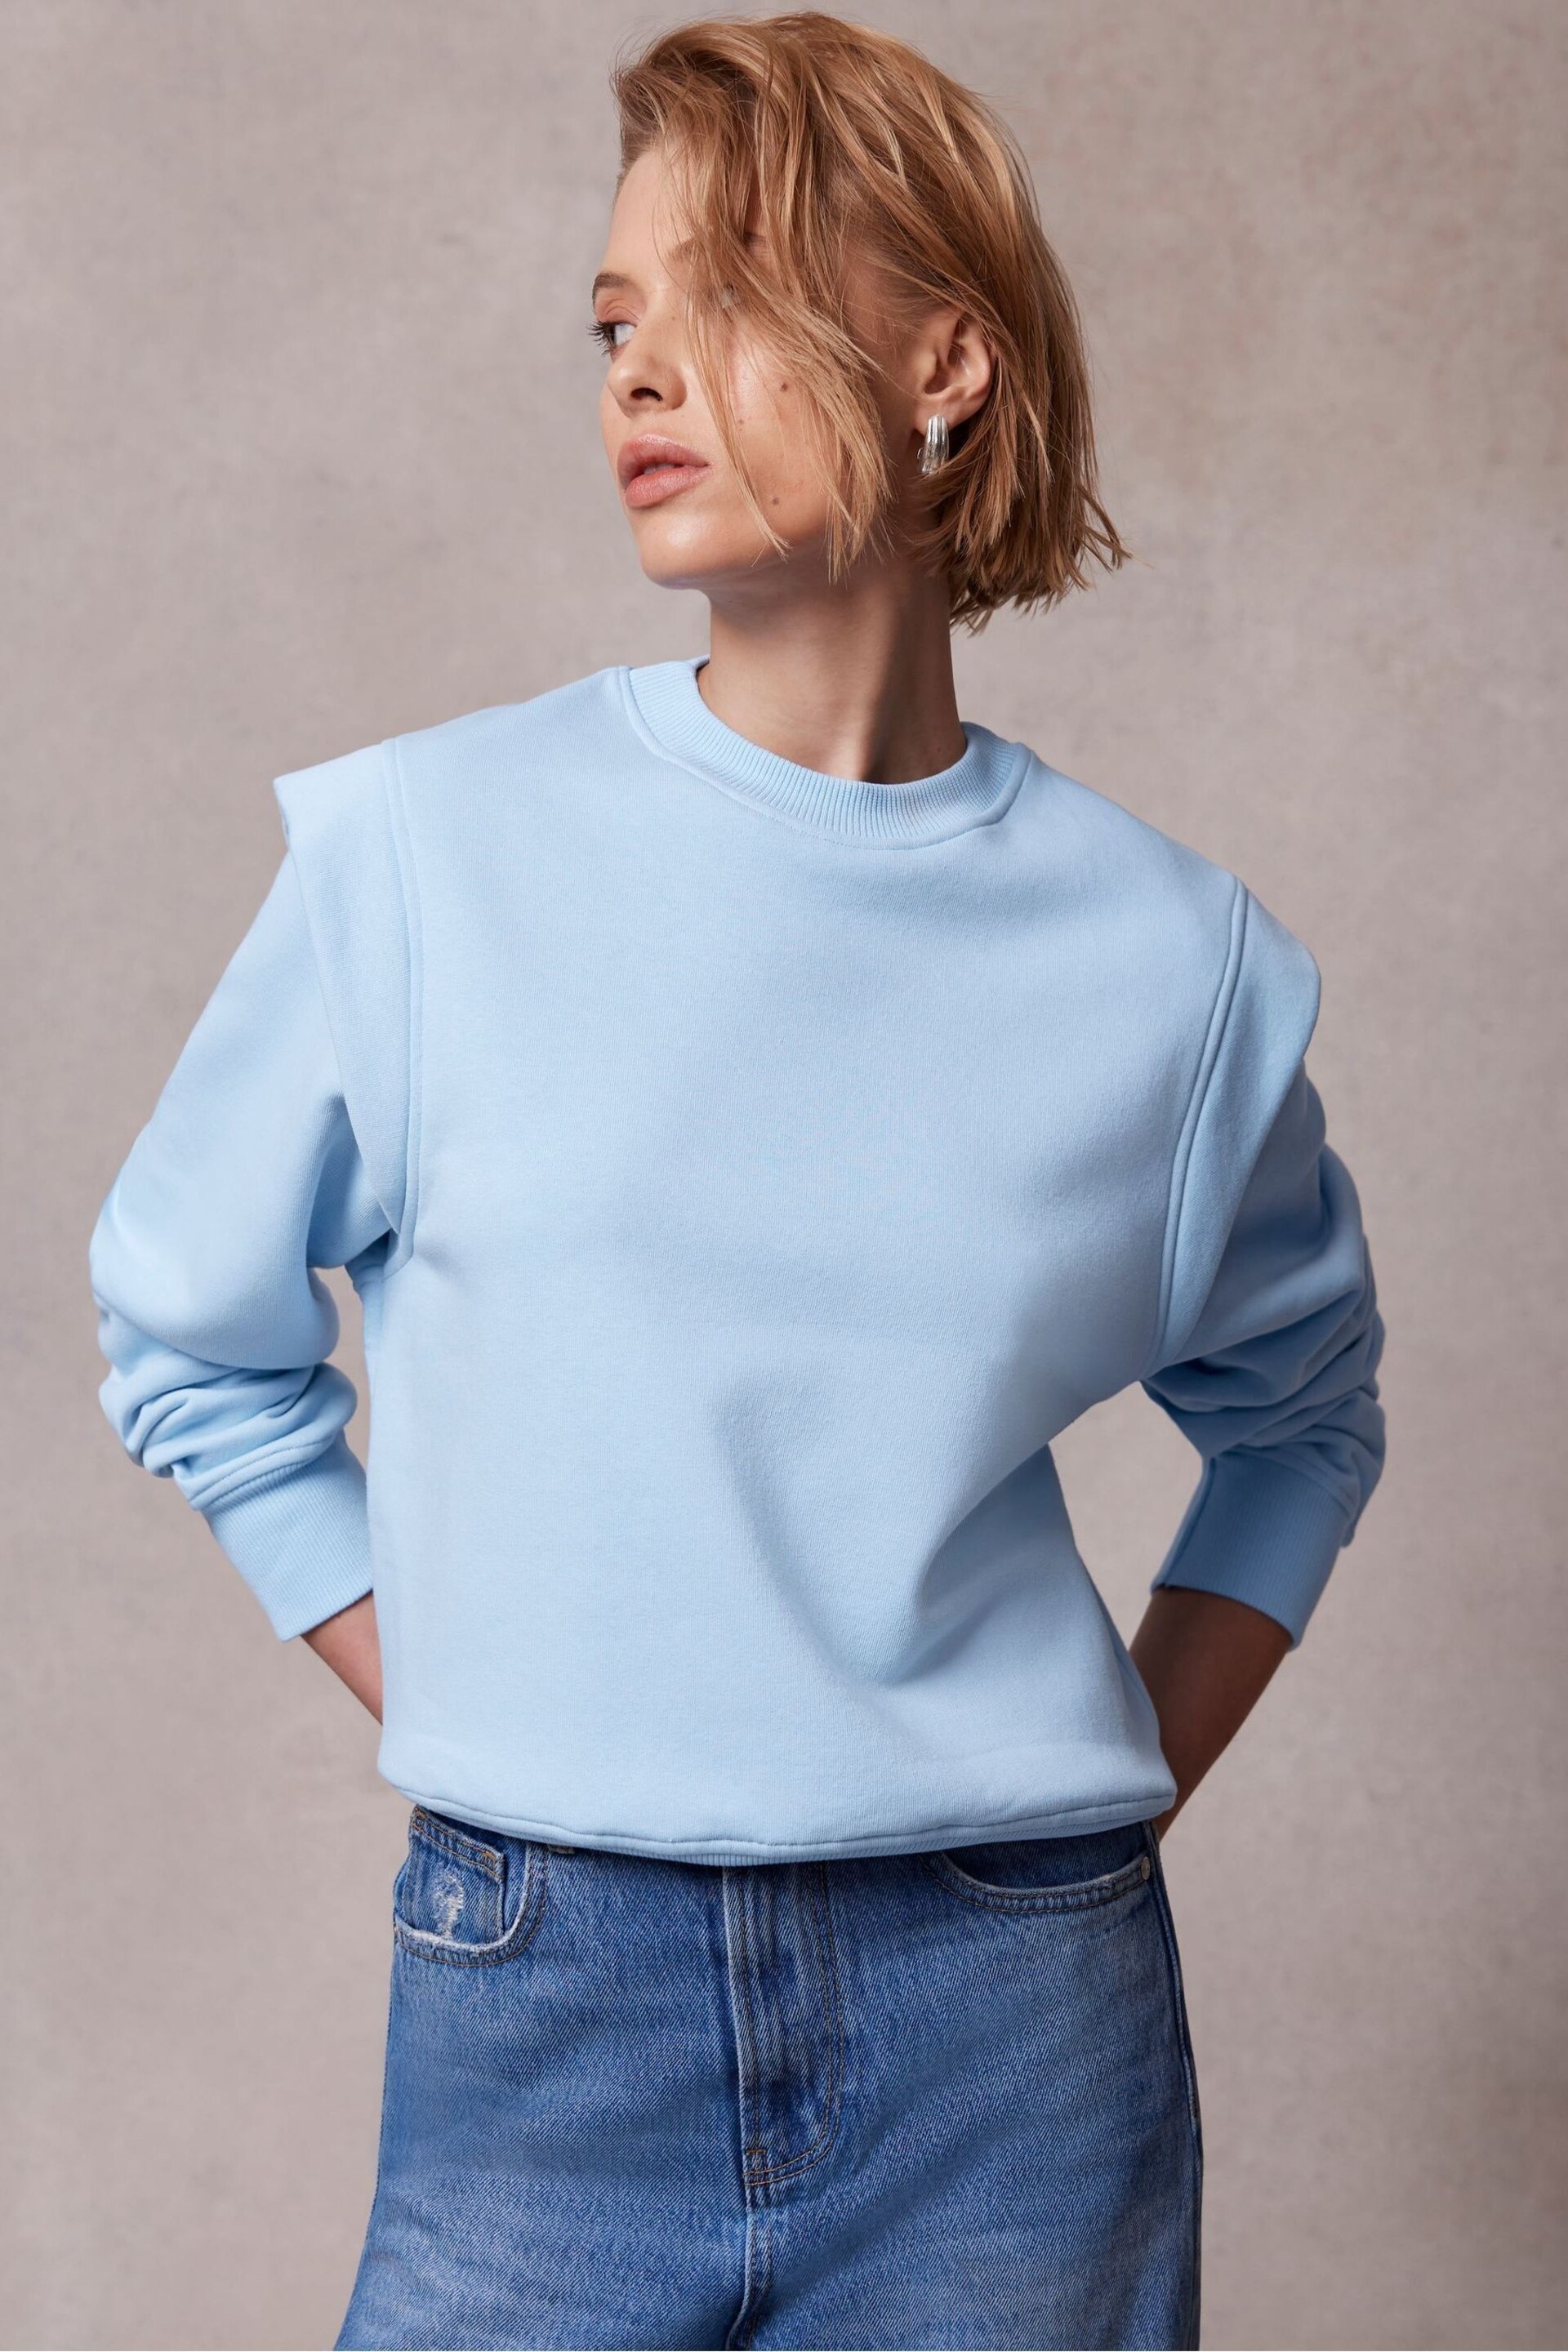 Mint Velvet Blue Cotton Sweatshirt - Image 1 of 4